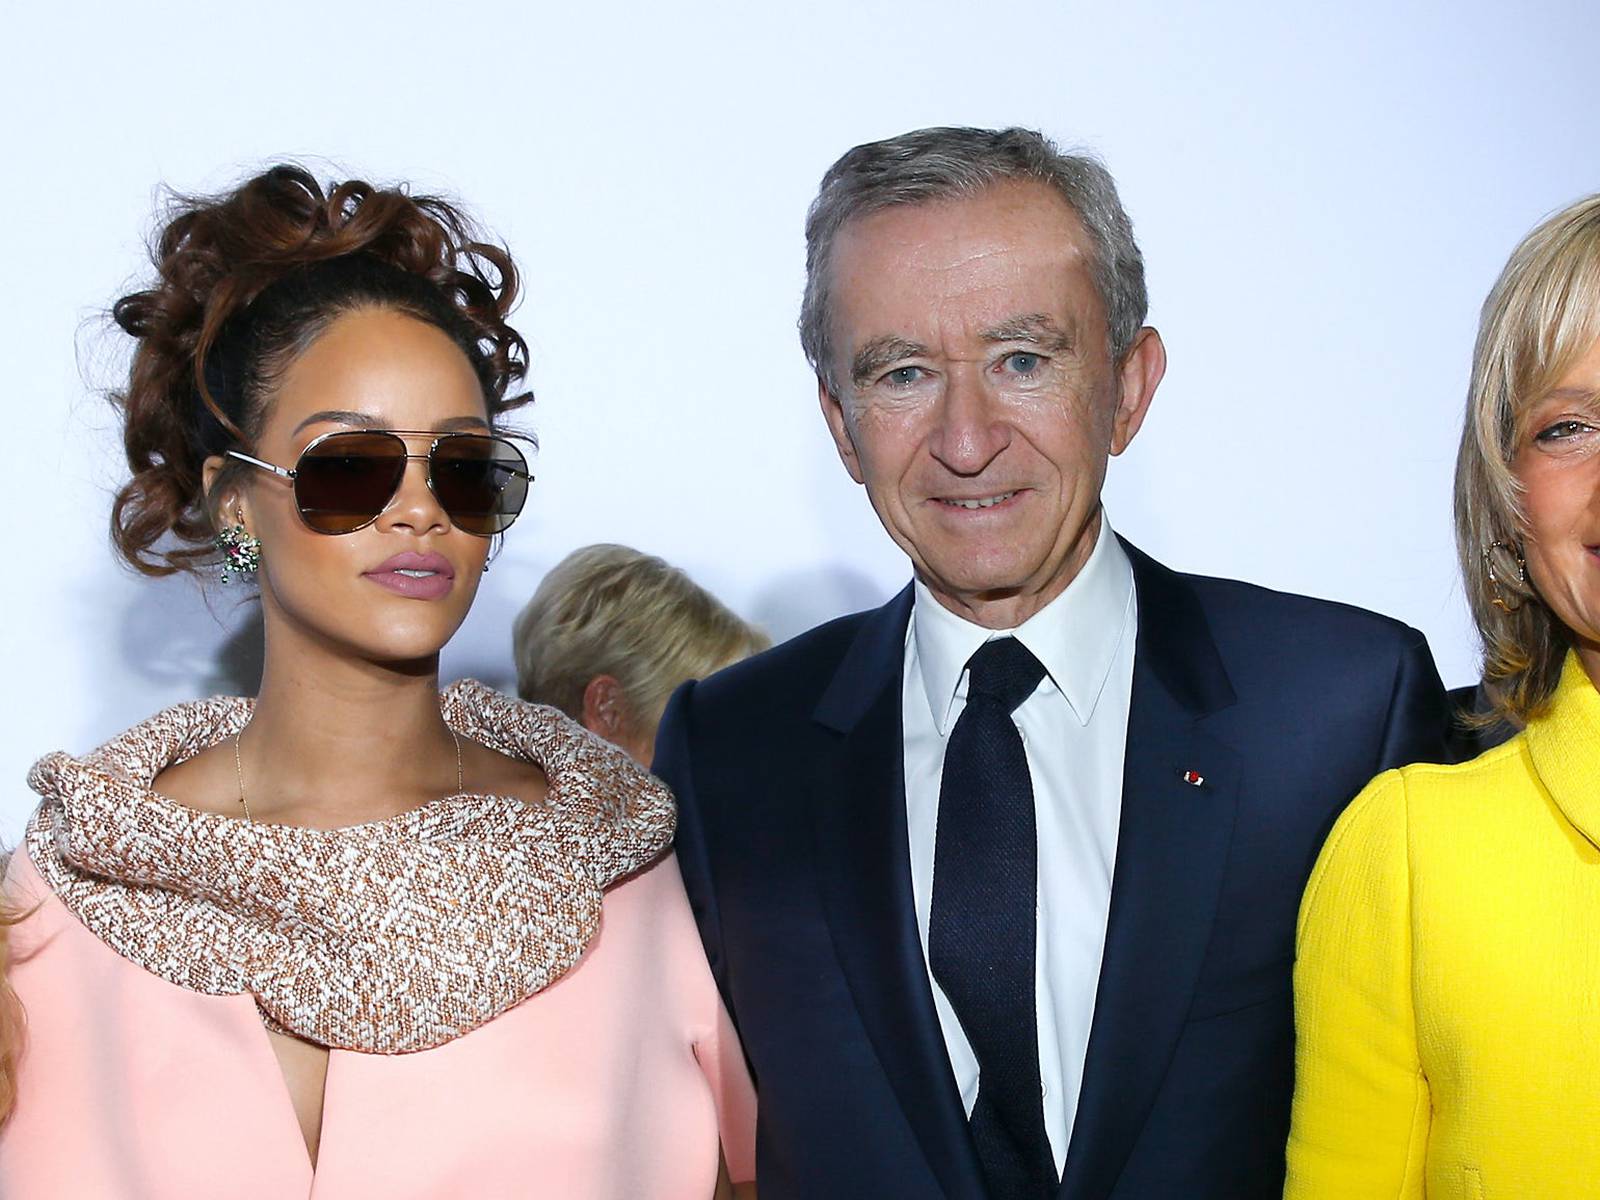 Rihanna and LVMH Are Pausing the Fenty Fashion House – WWD